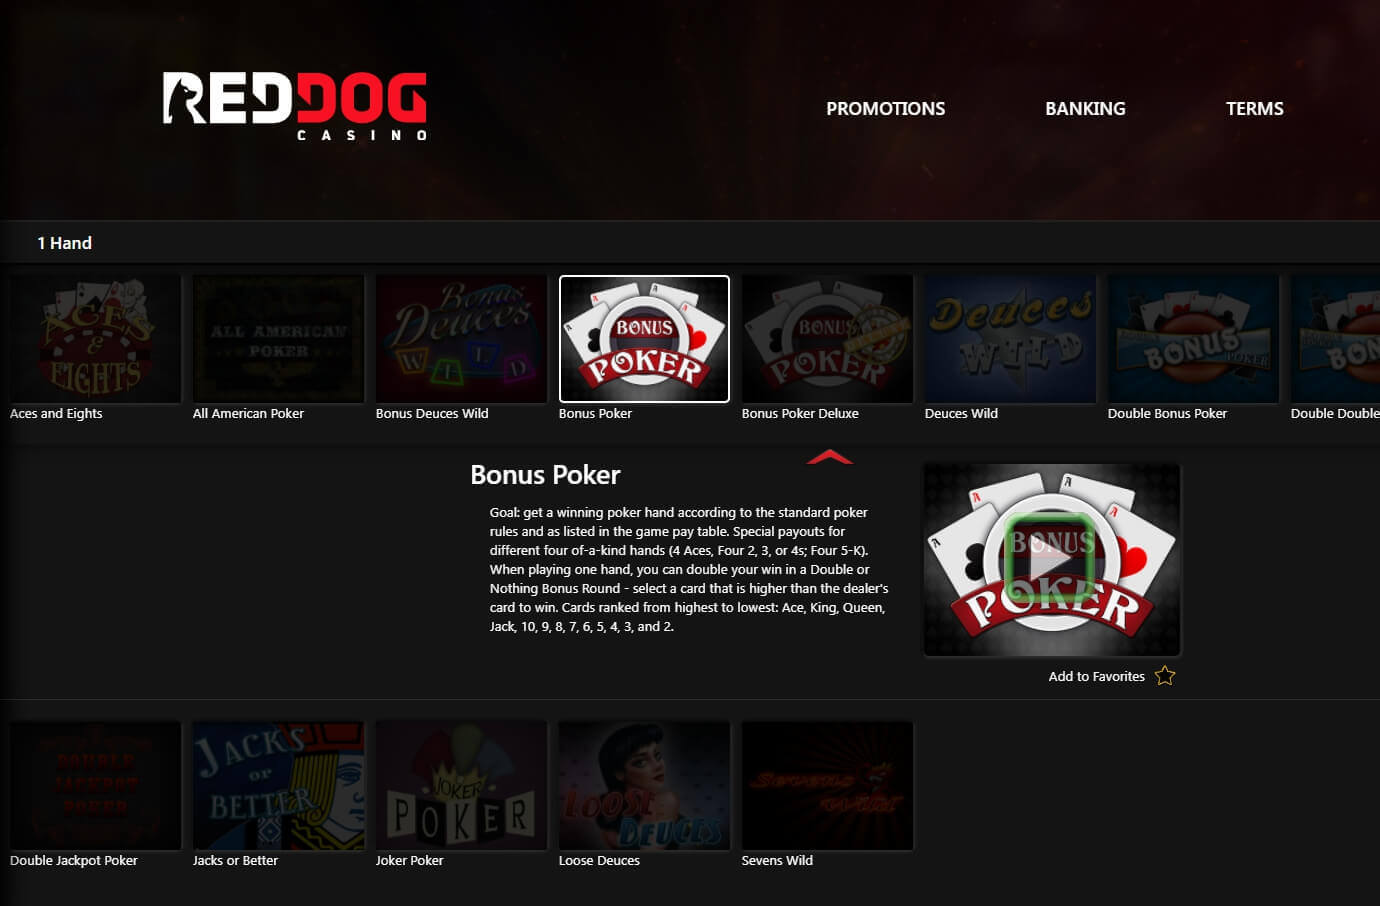 red dog casino slots